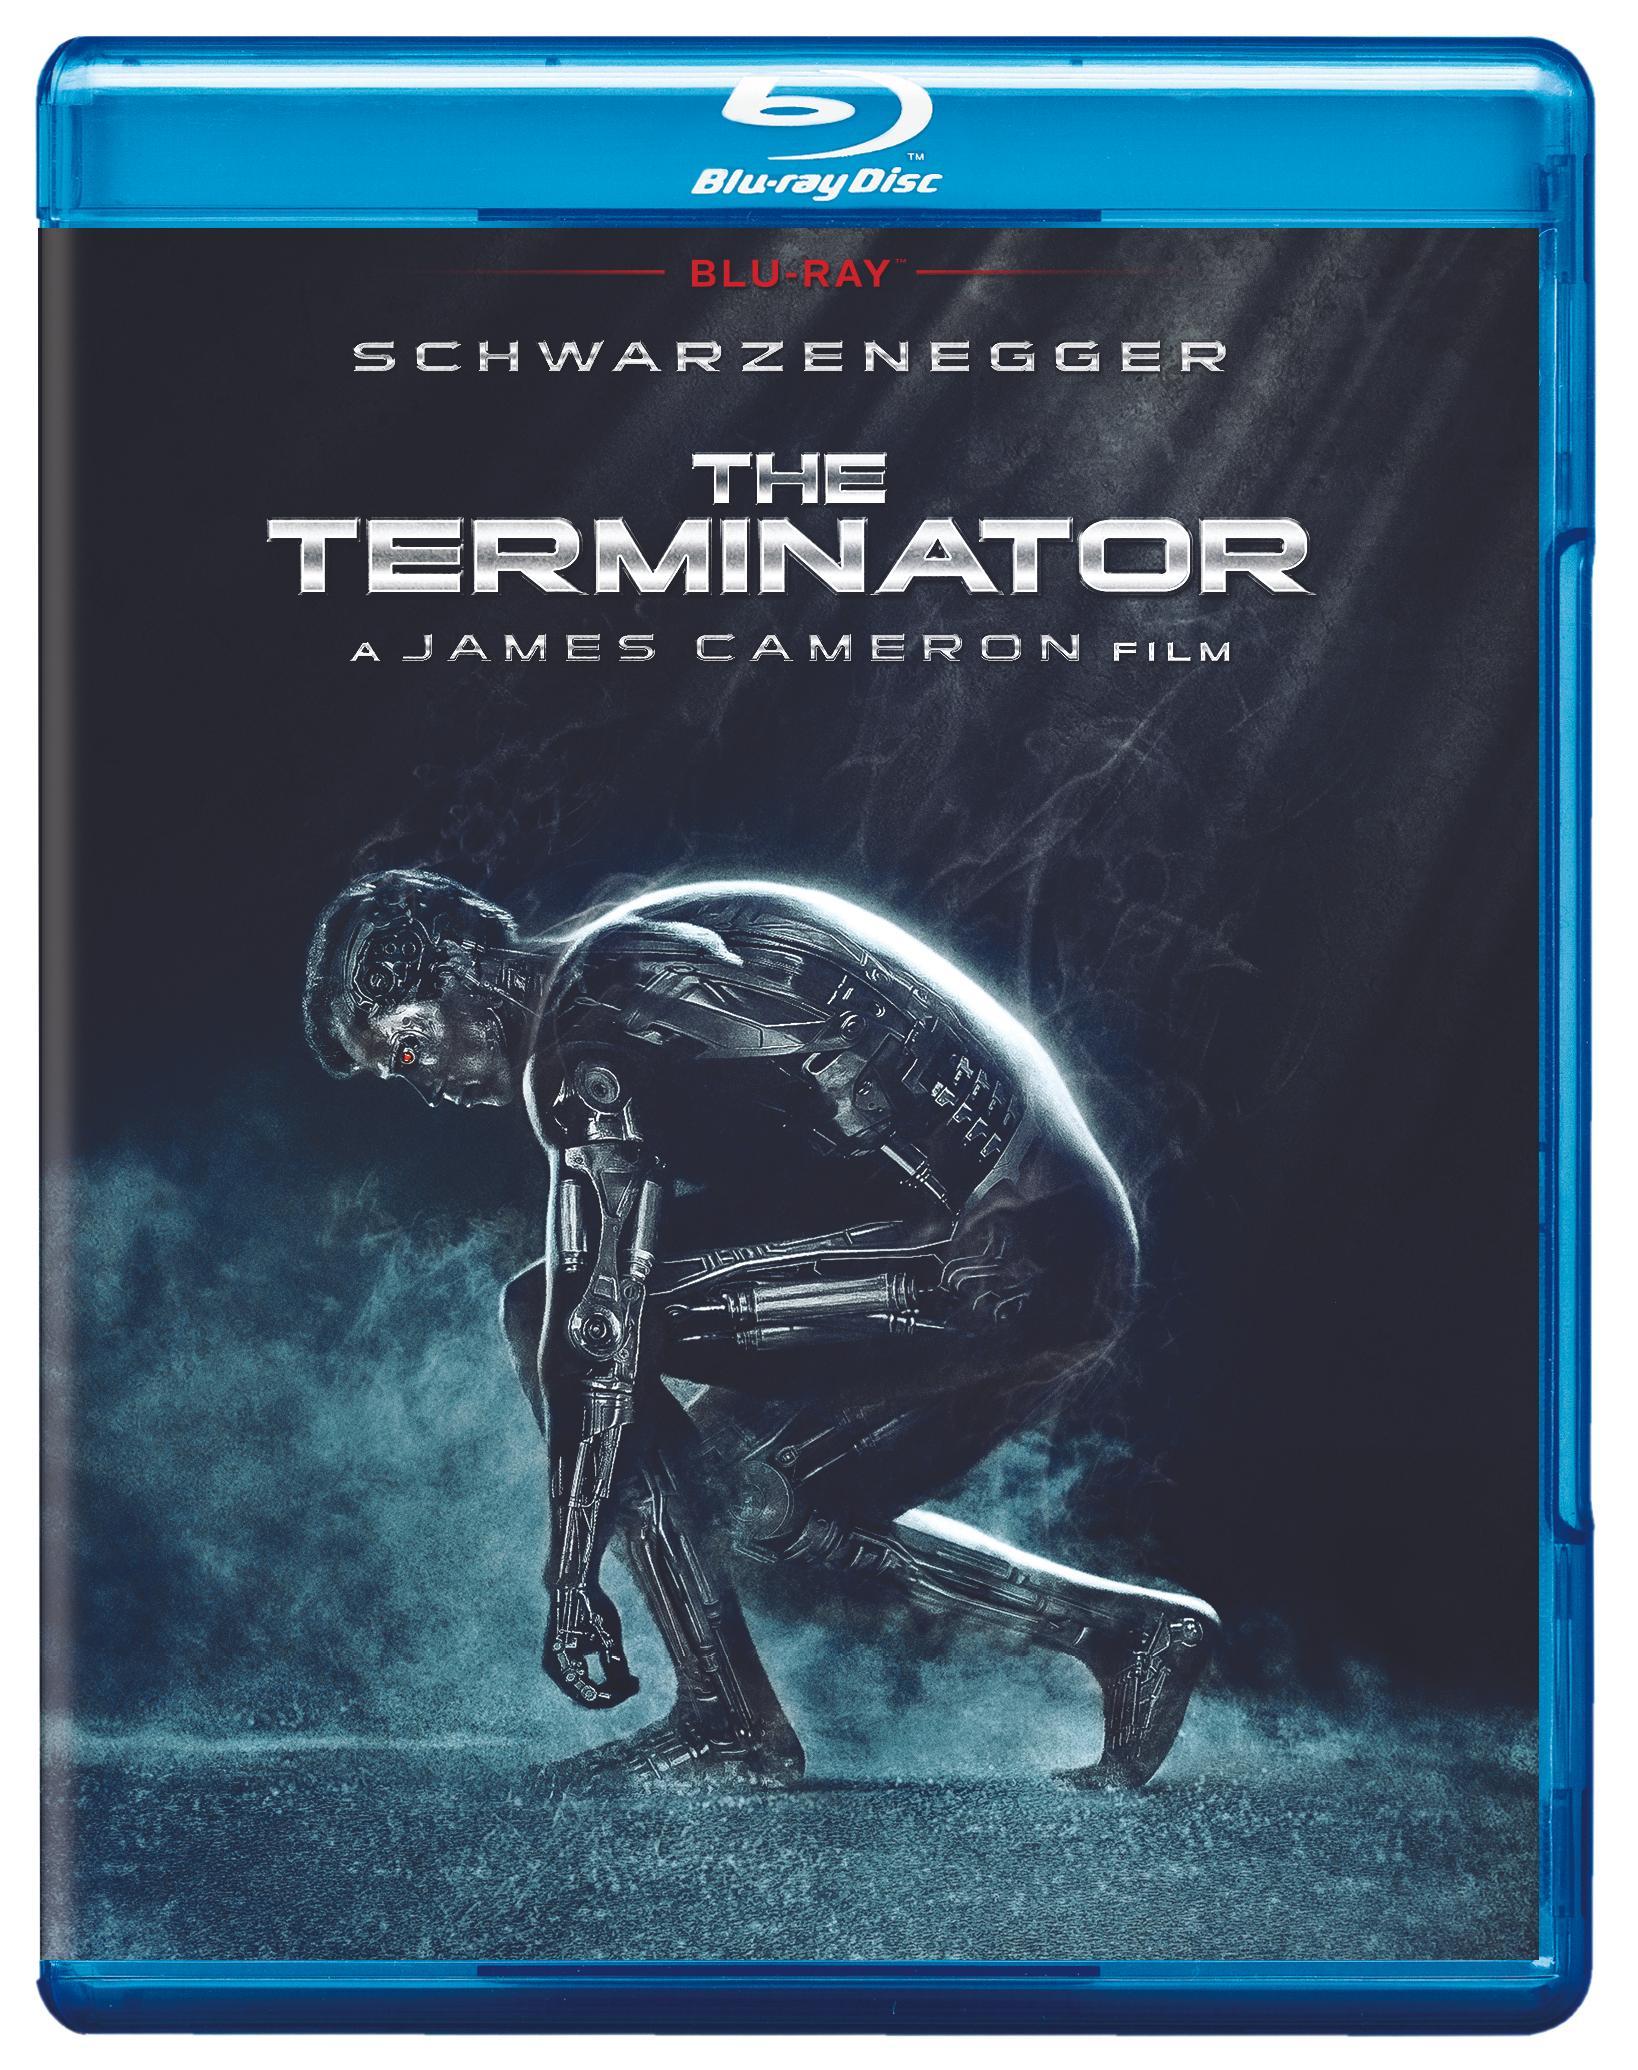 The Terminator (Blu-ray New Box Art) - Blu-ray [ 1984 ]  - Sci Fi Movies On Blu-ray - Movies On GRUV